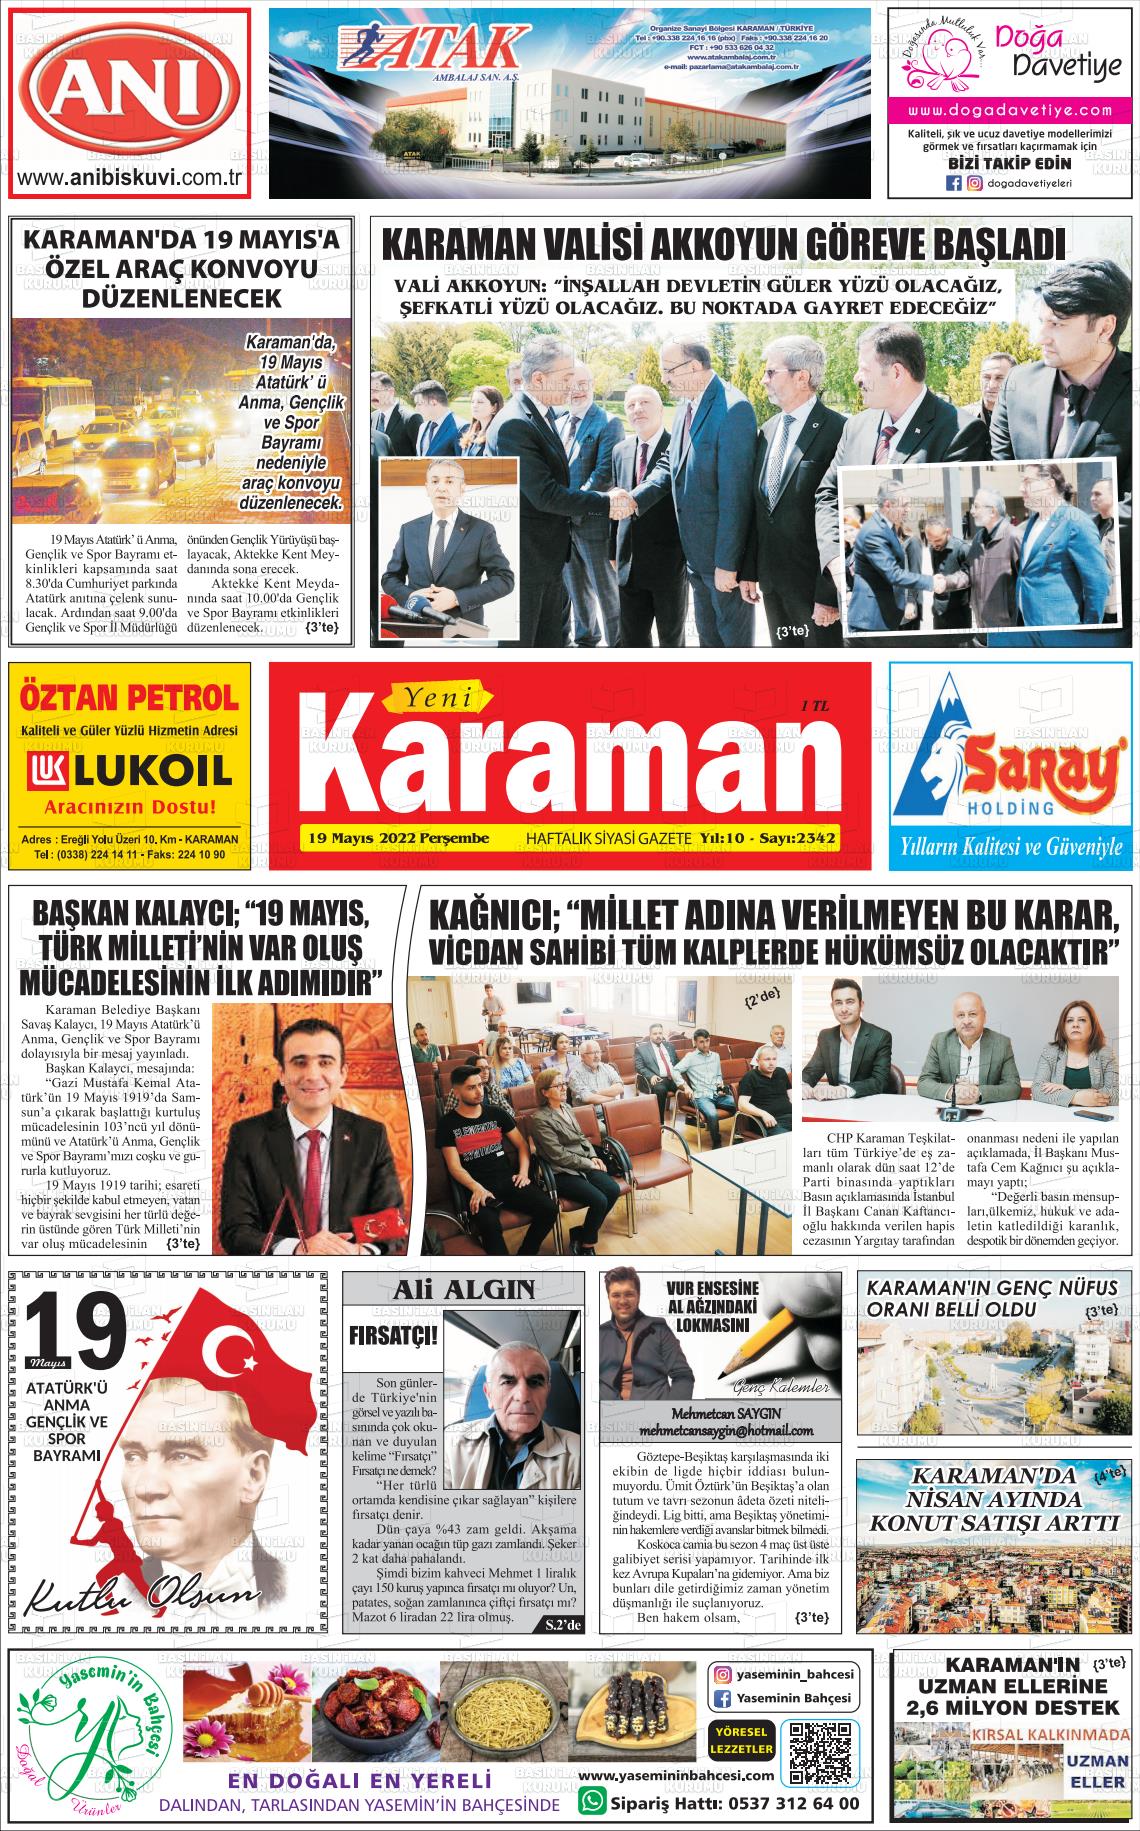 19 Mayıs 2022 Yeni Karaman Gazete Manşeti